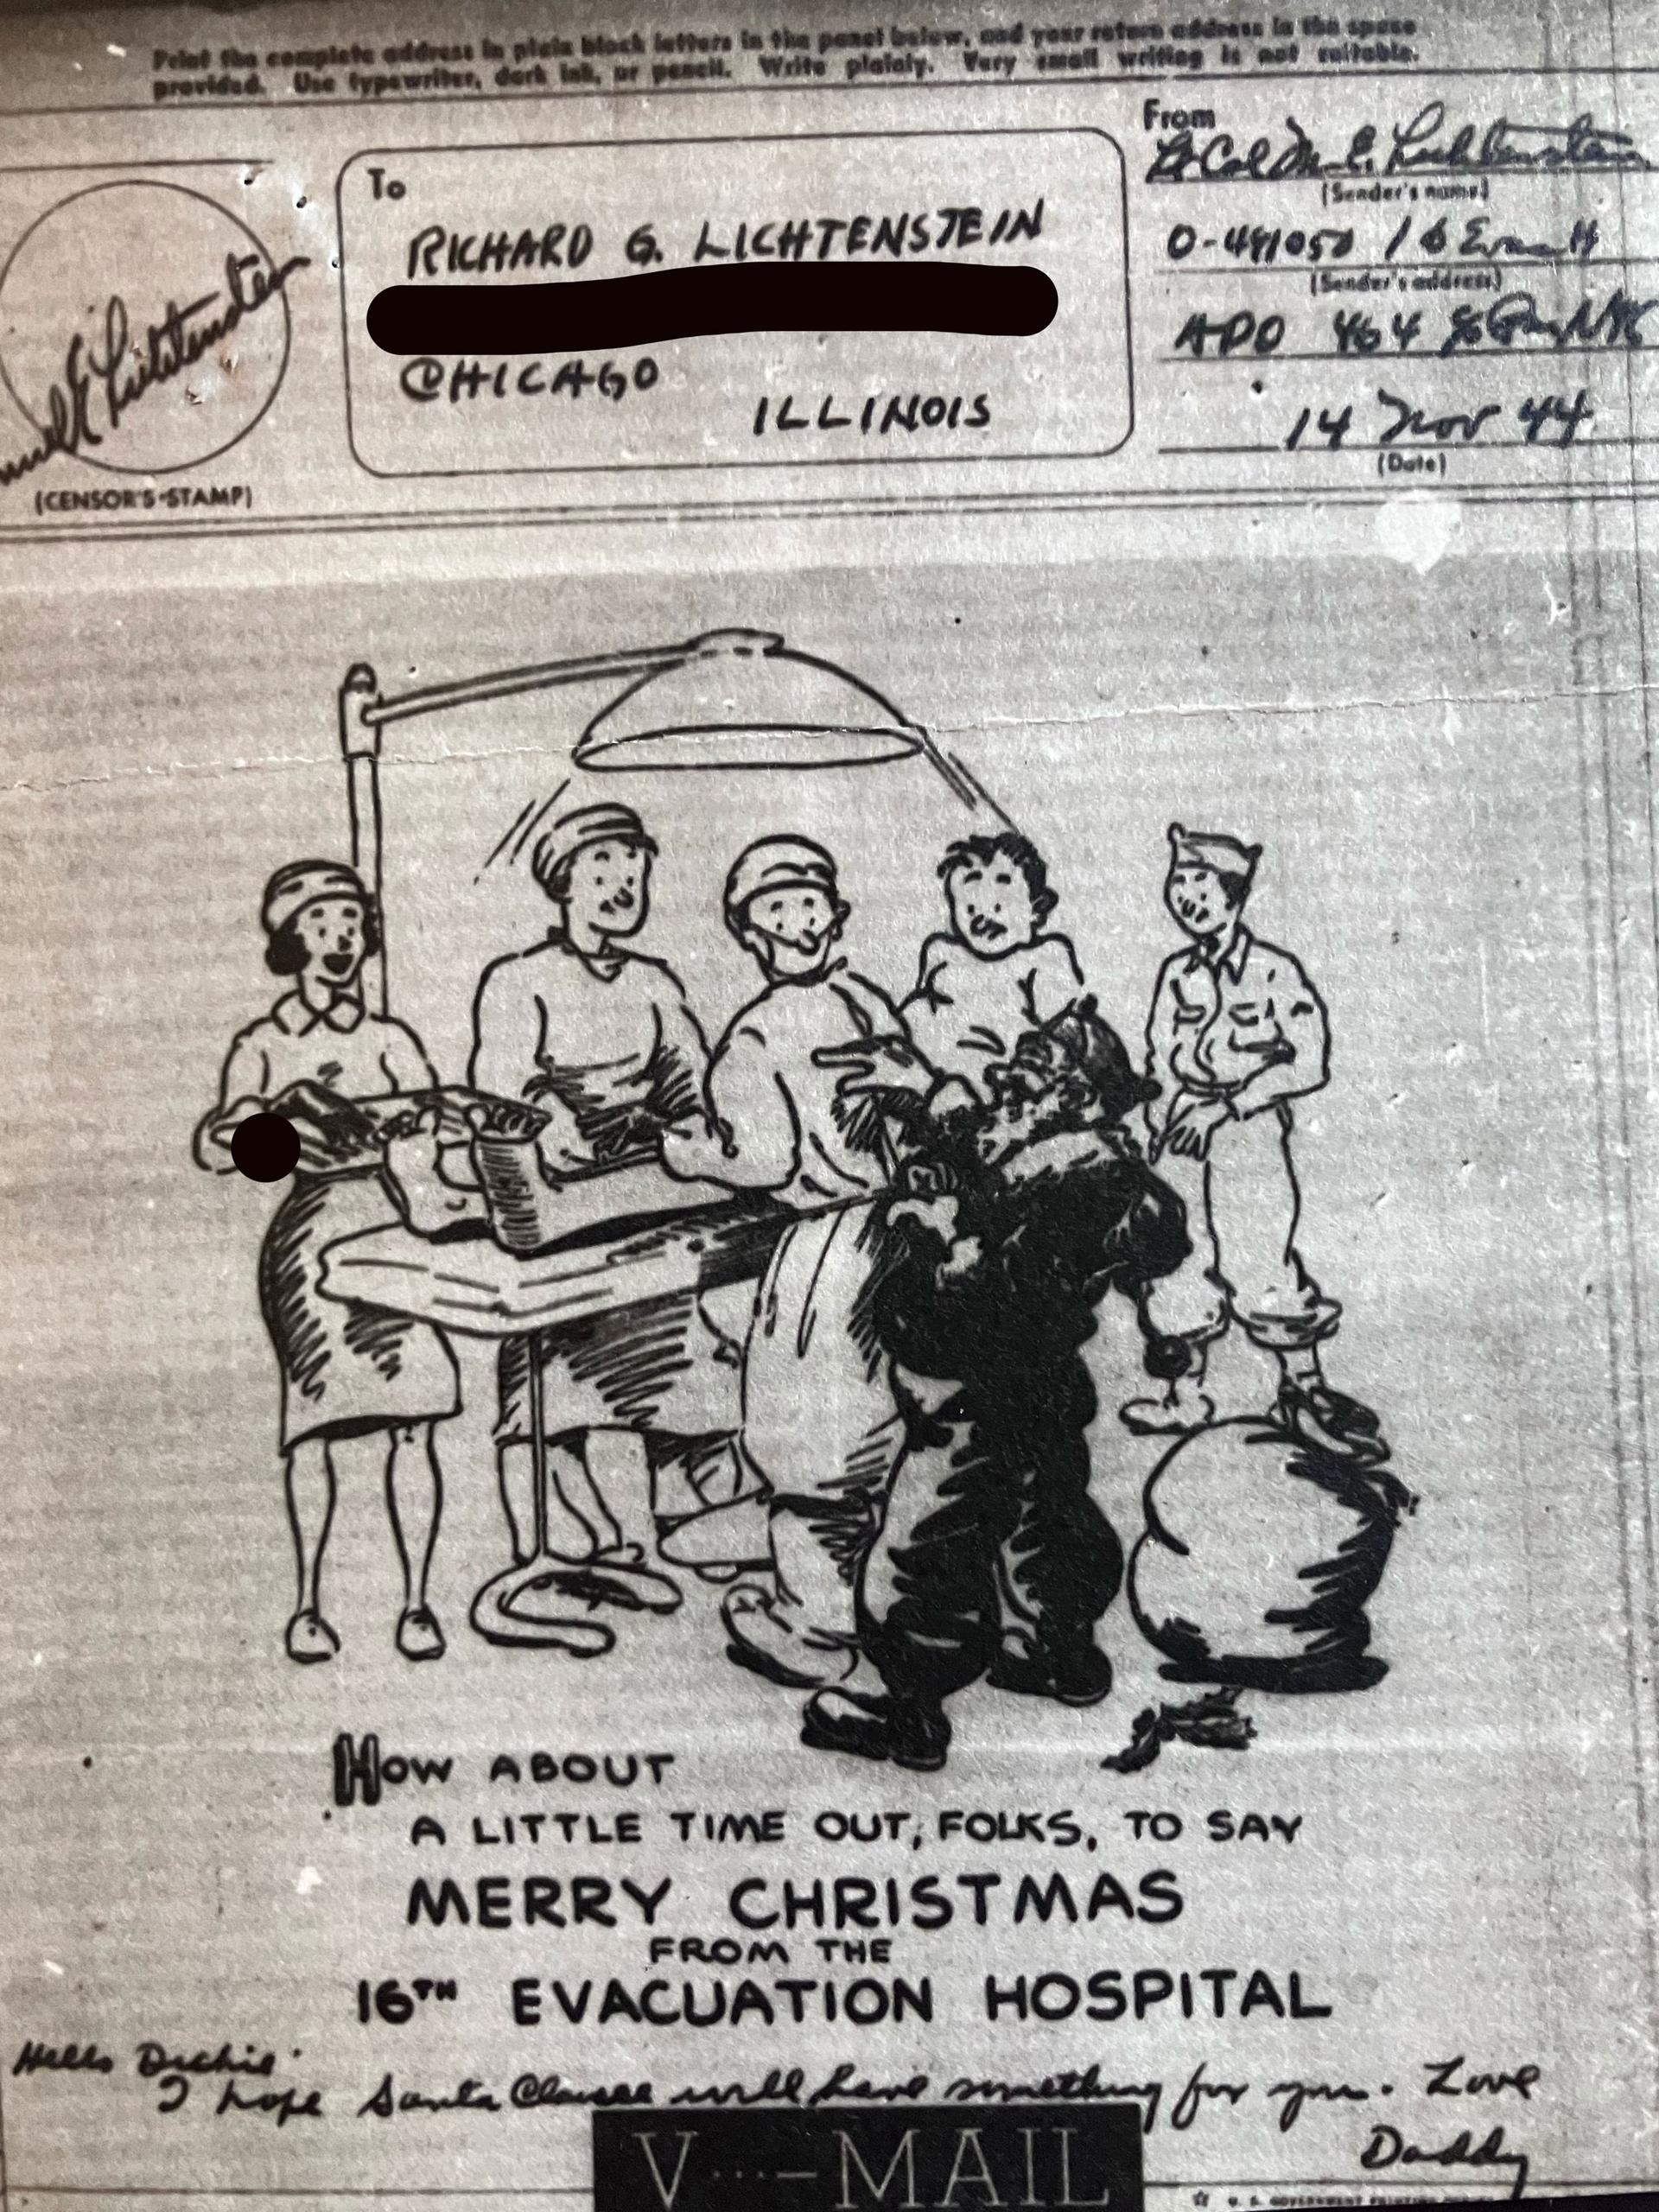 A Christmas greeting from Manuel E. Lichtenstein sent via 